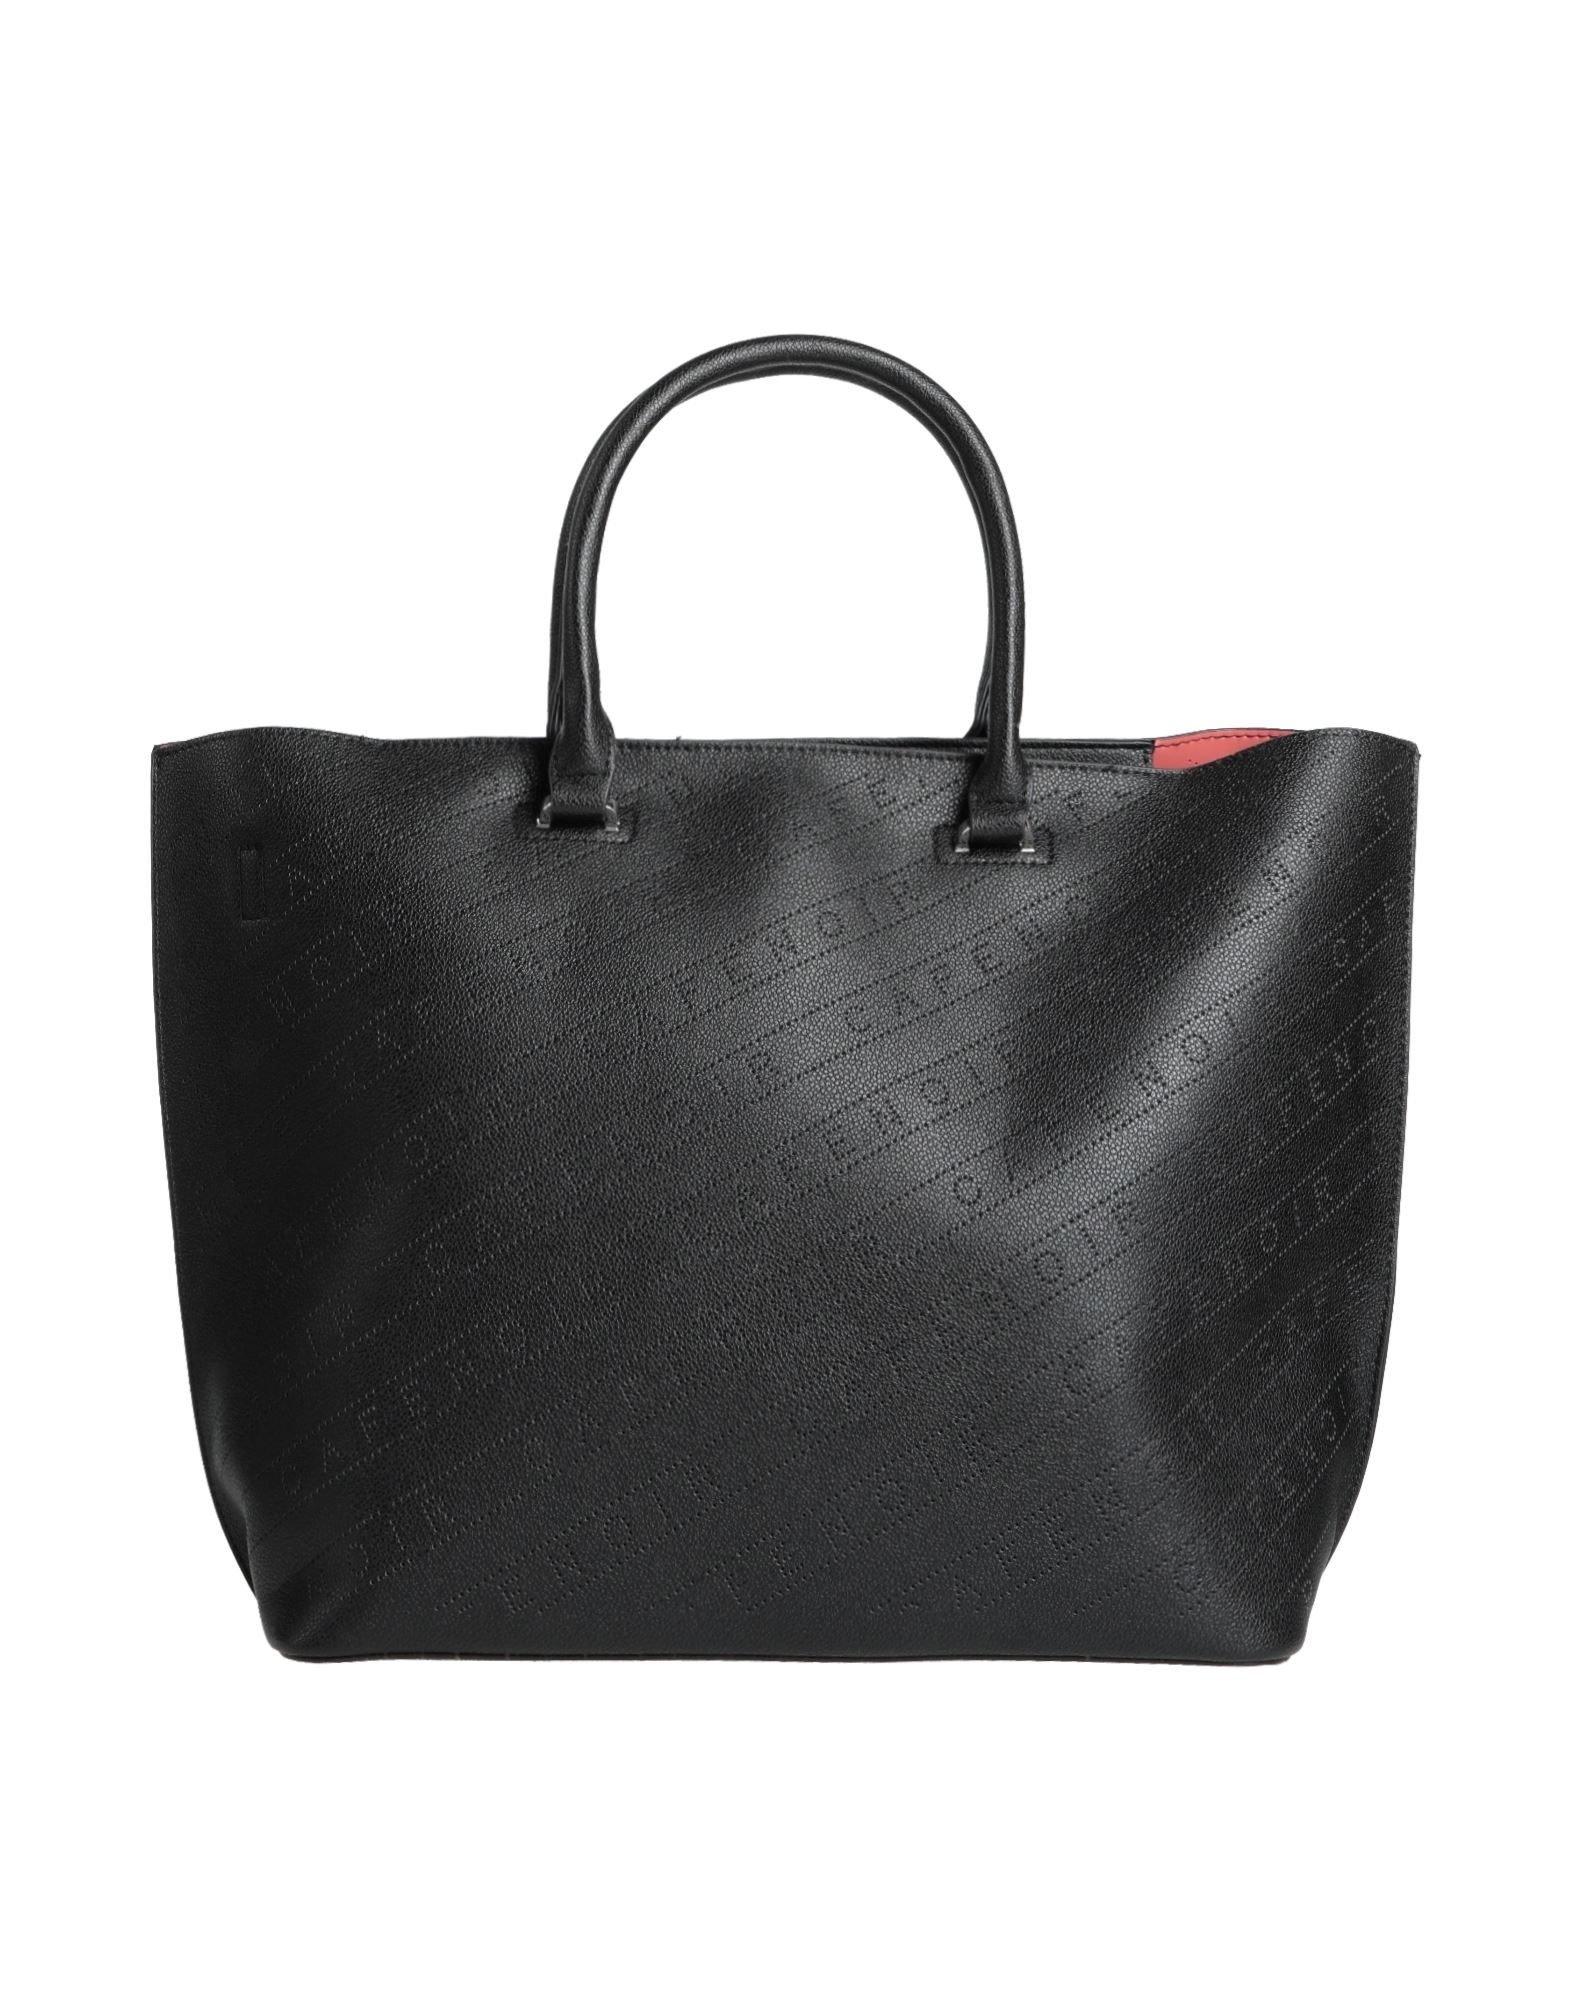 Cafènoir Handbags In Black